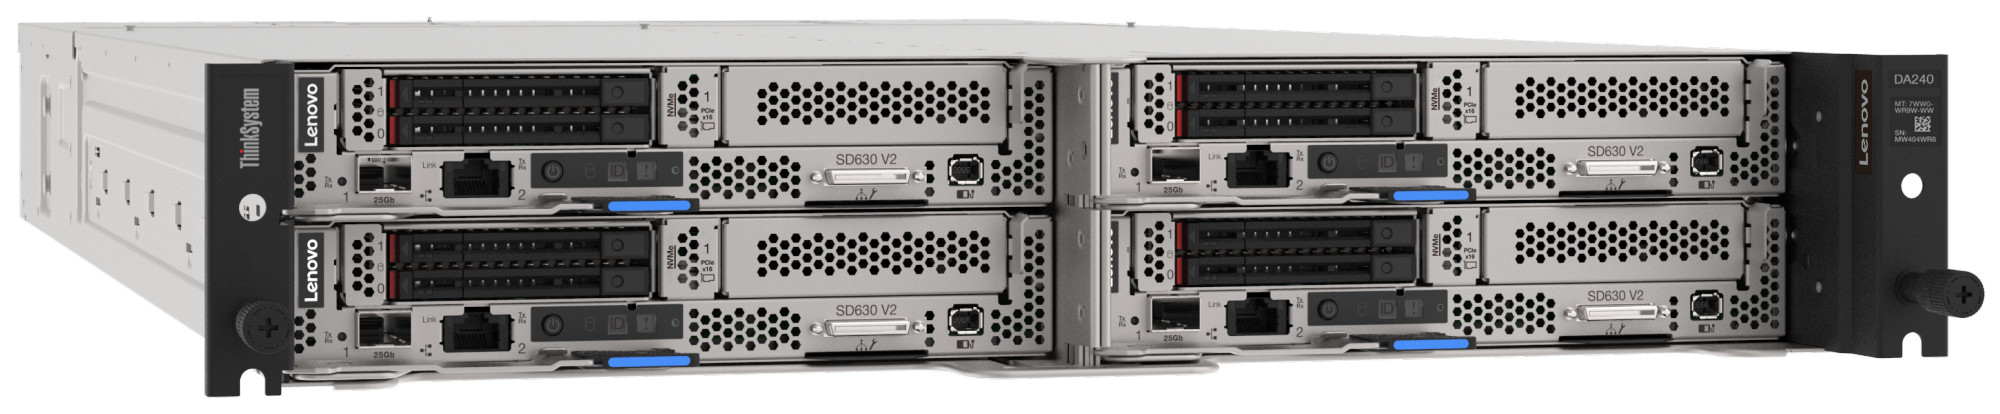 Four ThinkSystem SD630 V2 servers installed in a DA240 Enclosure